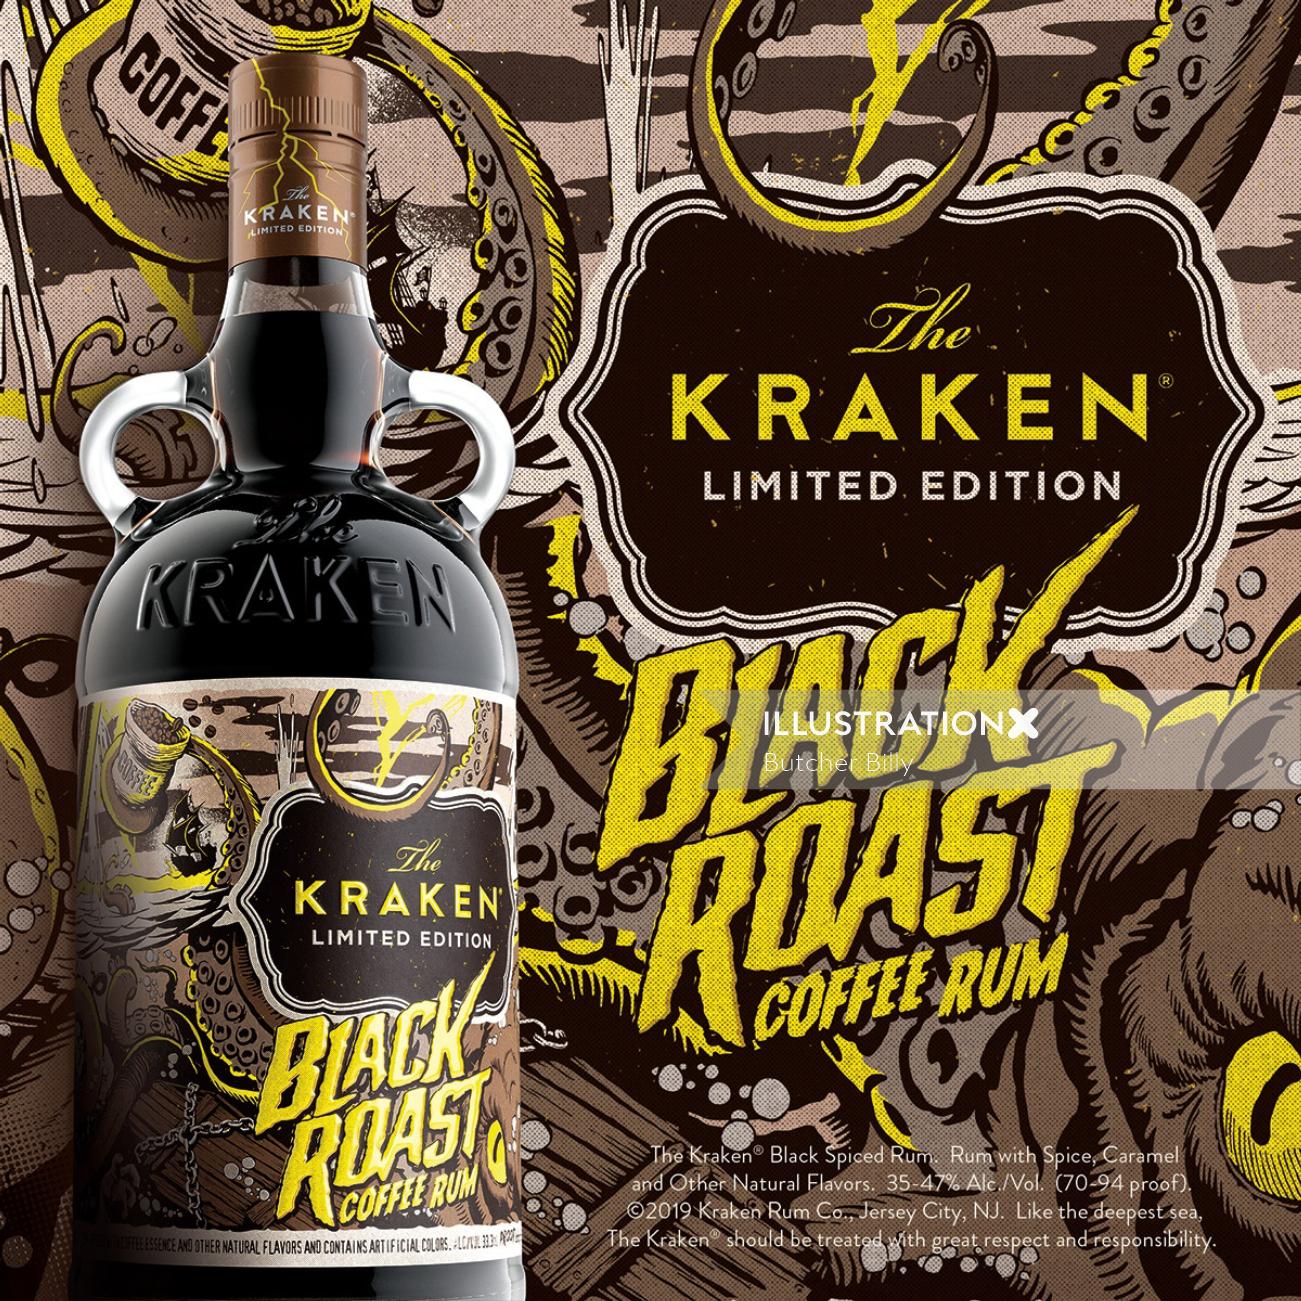 Kraken 黑烤咖啡朗姆酒的标签设计